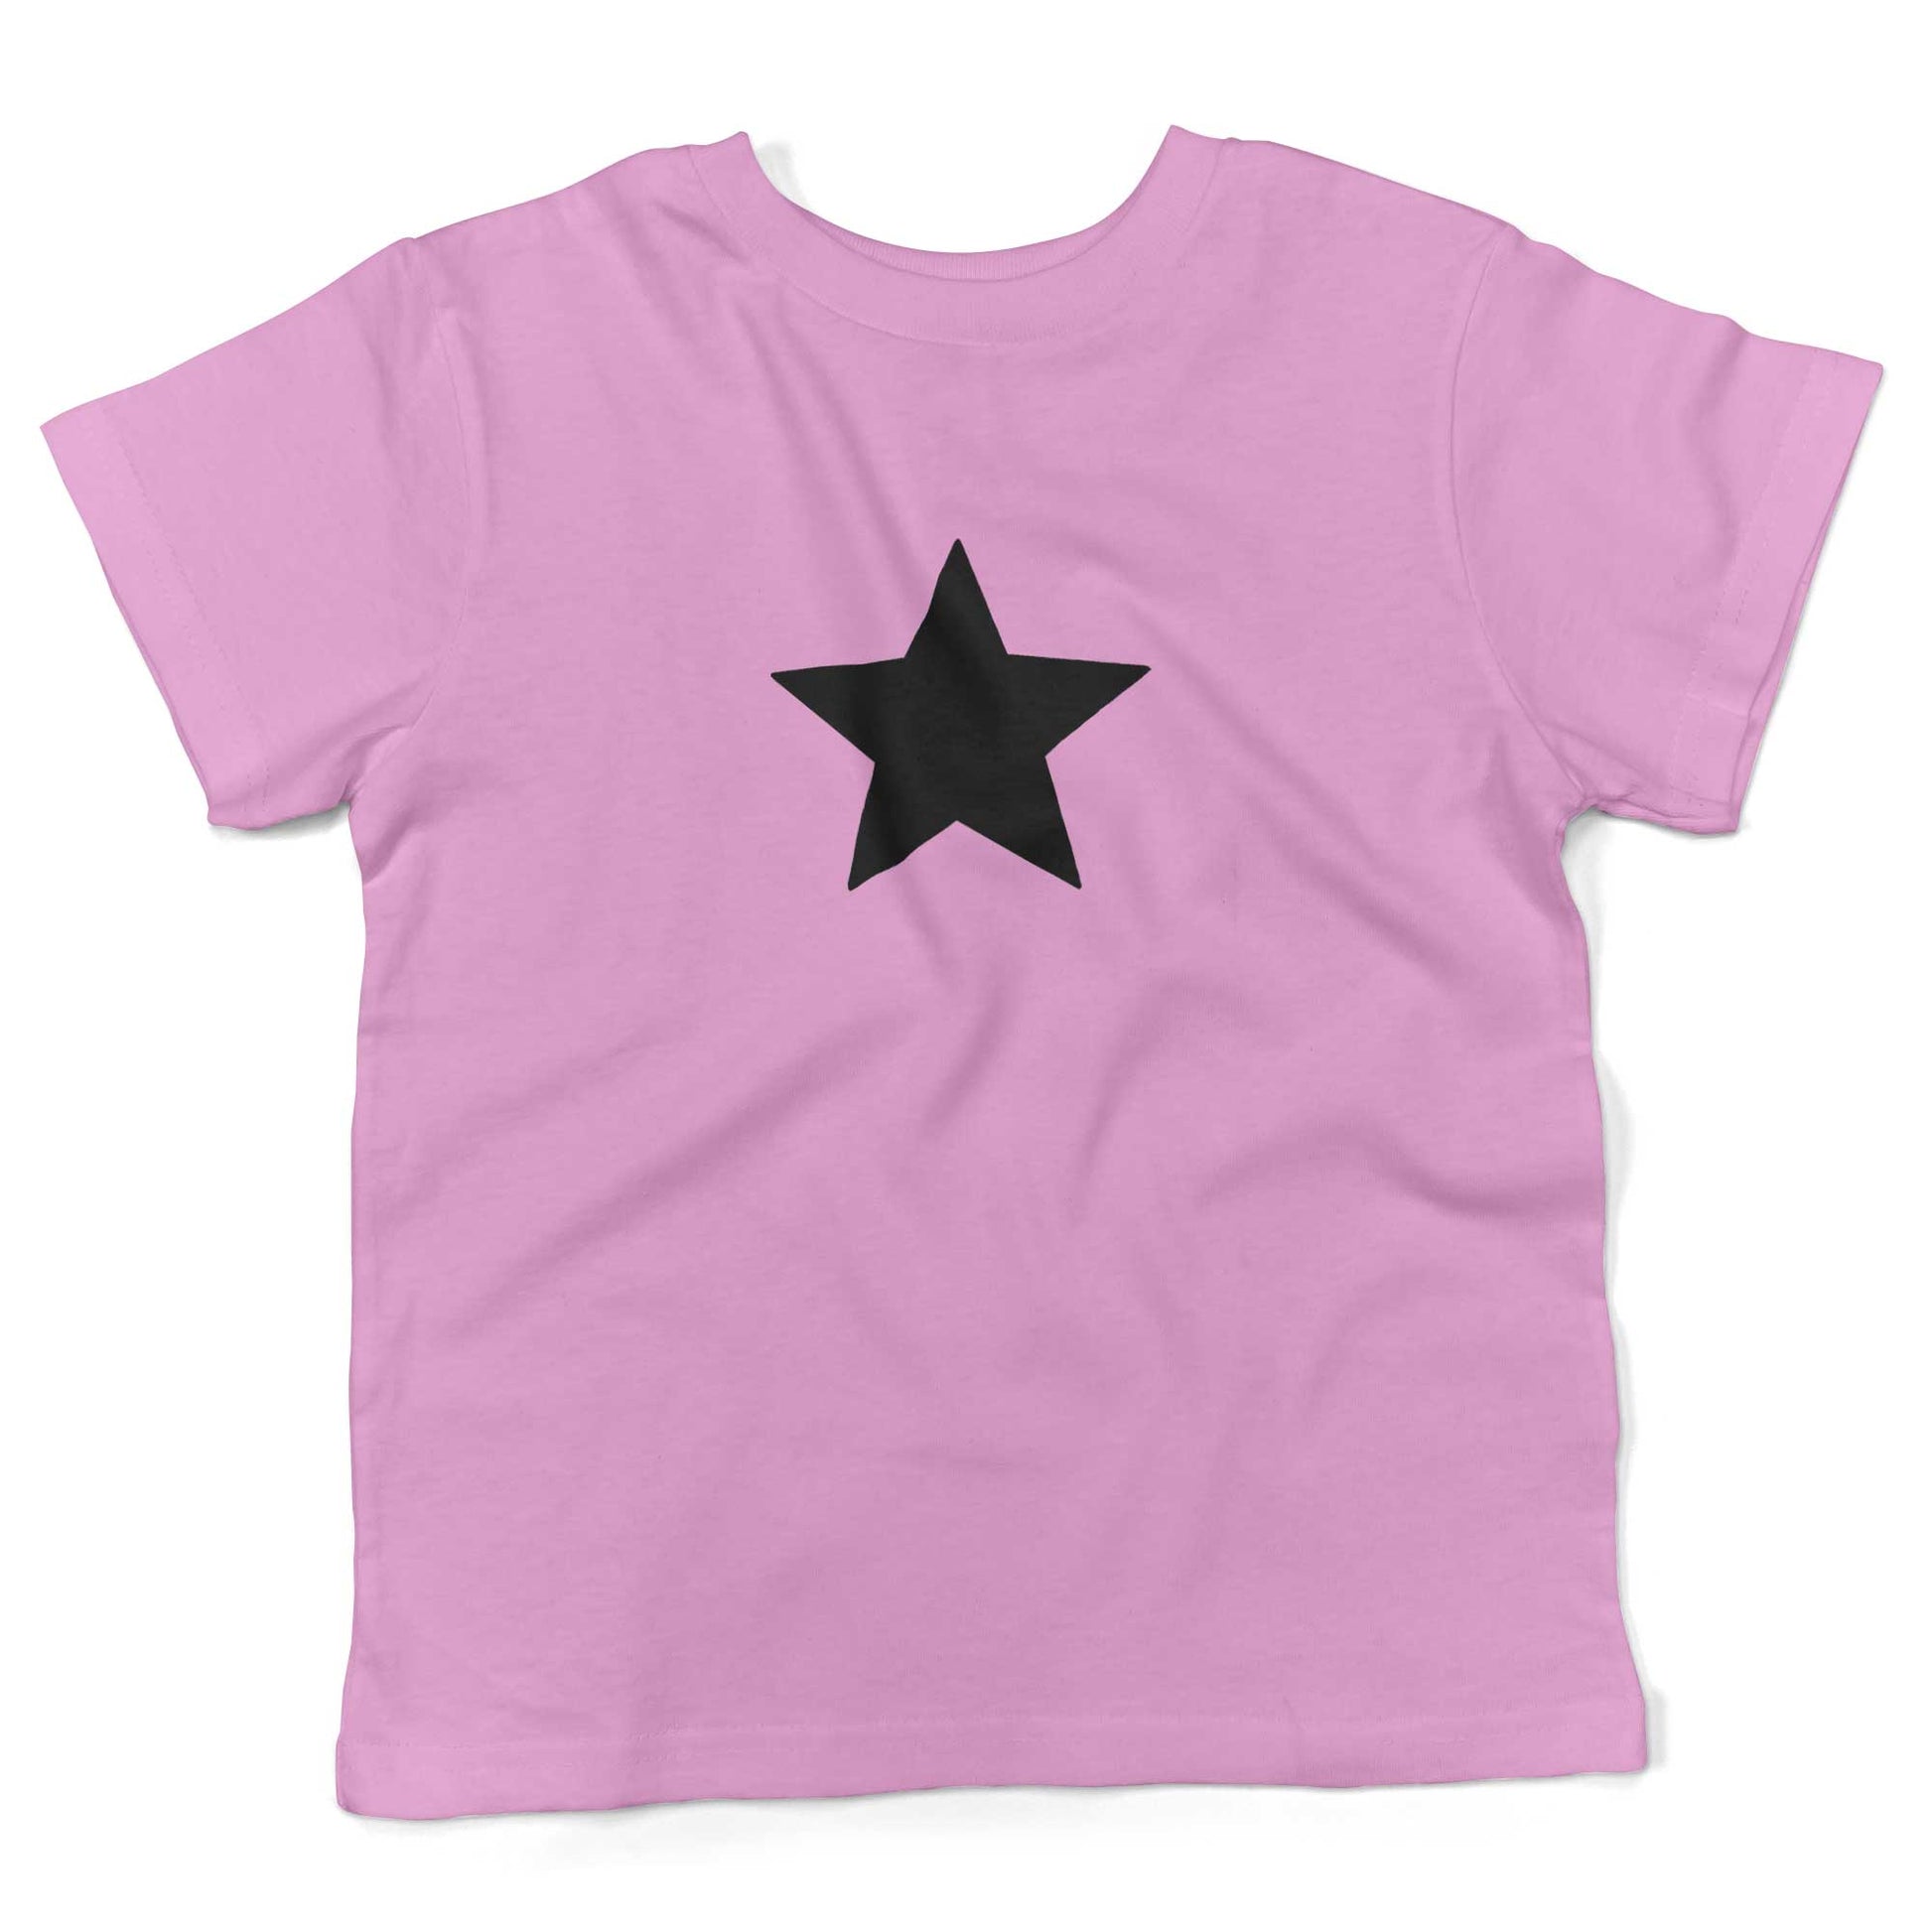 Five-Point Star Toddler Shirt-Organic Pink-Black Star